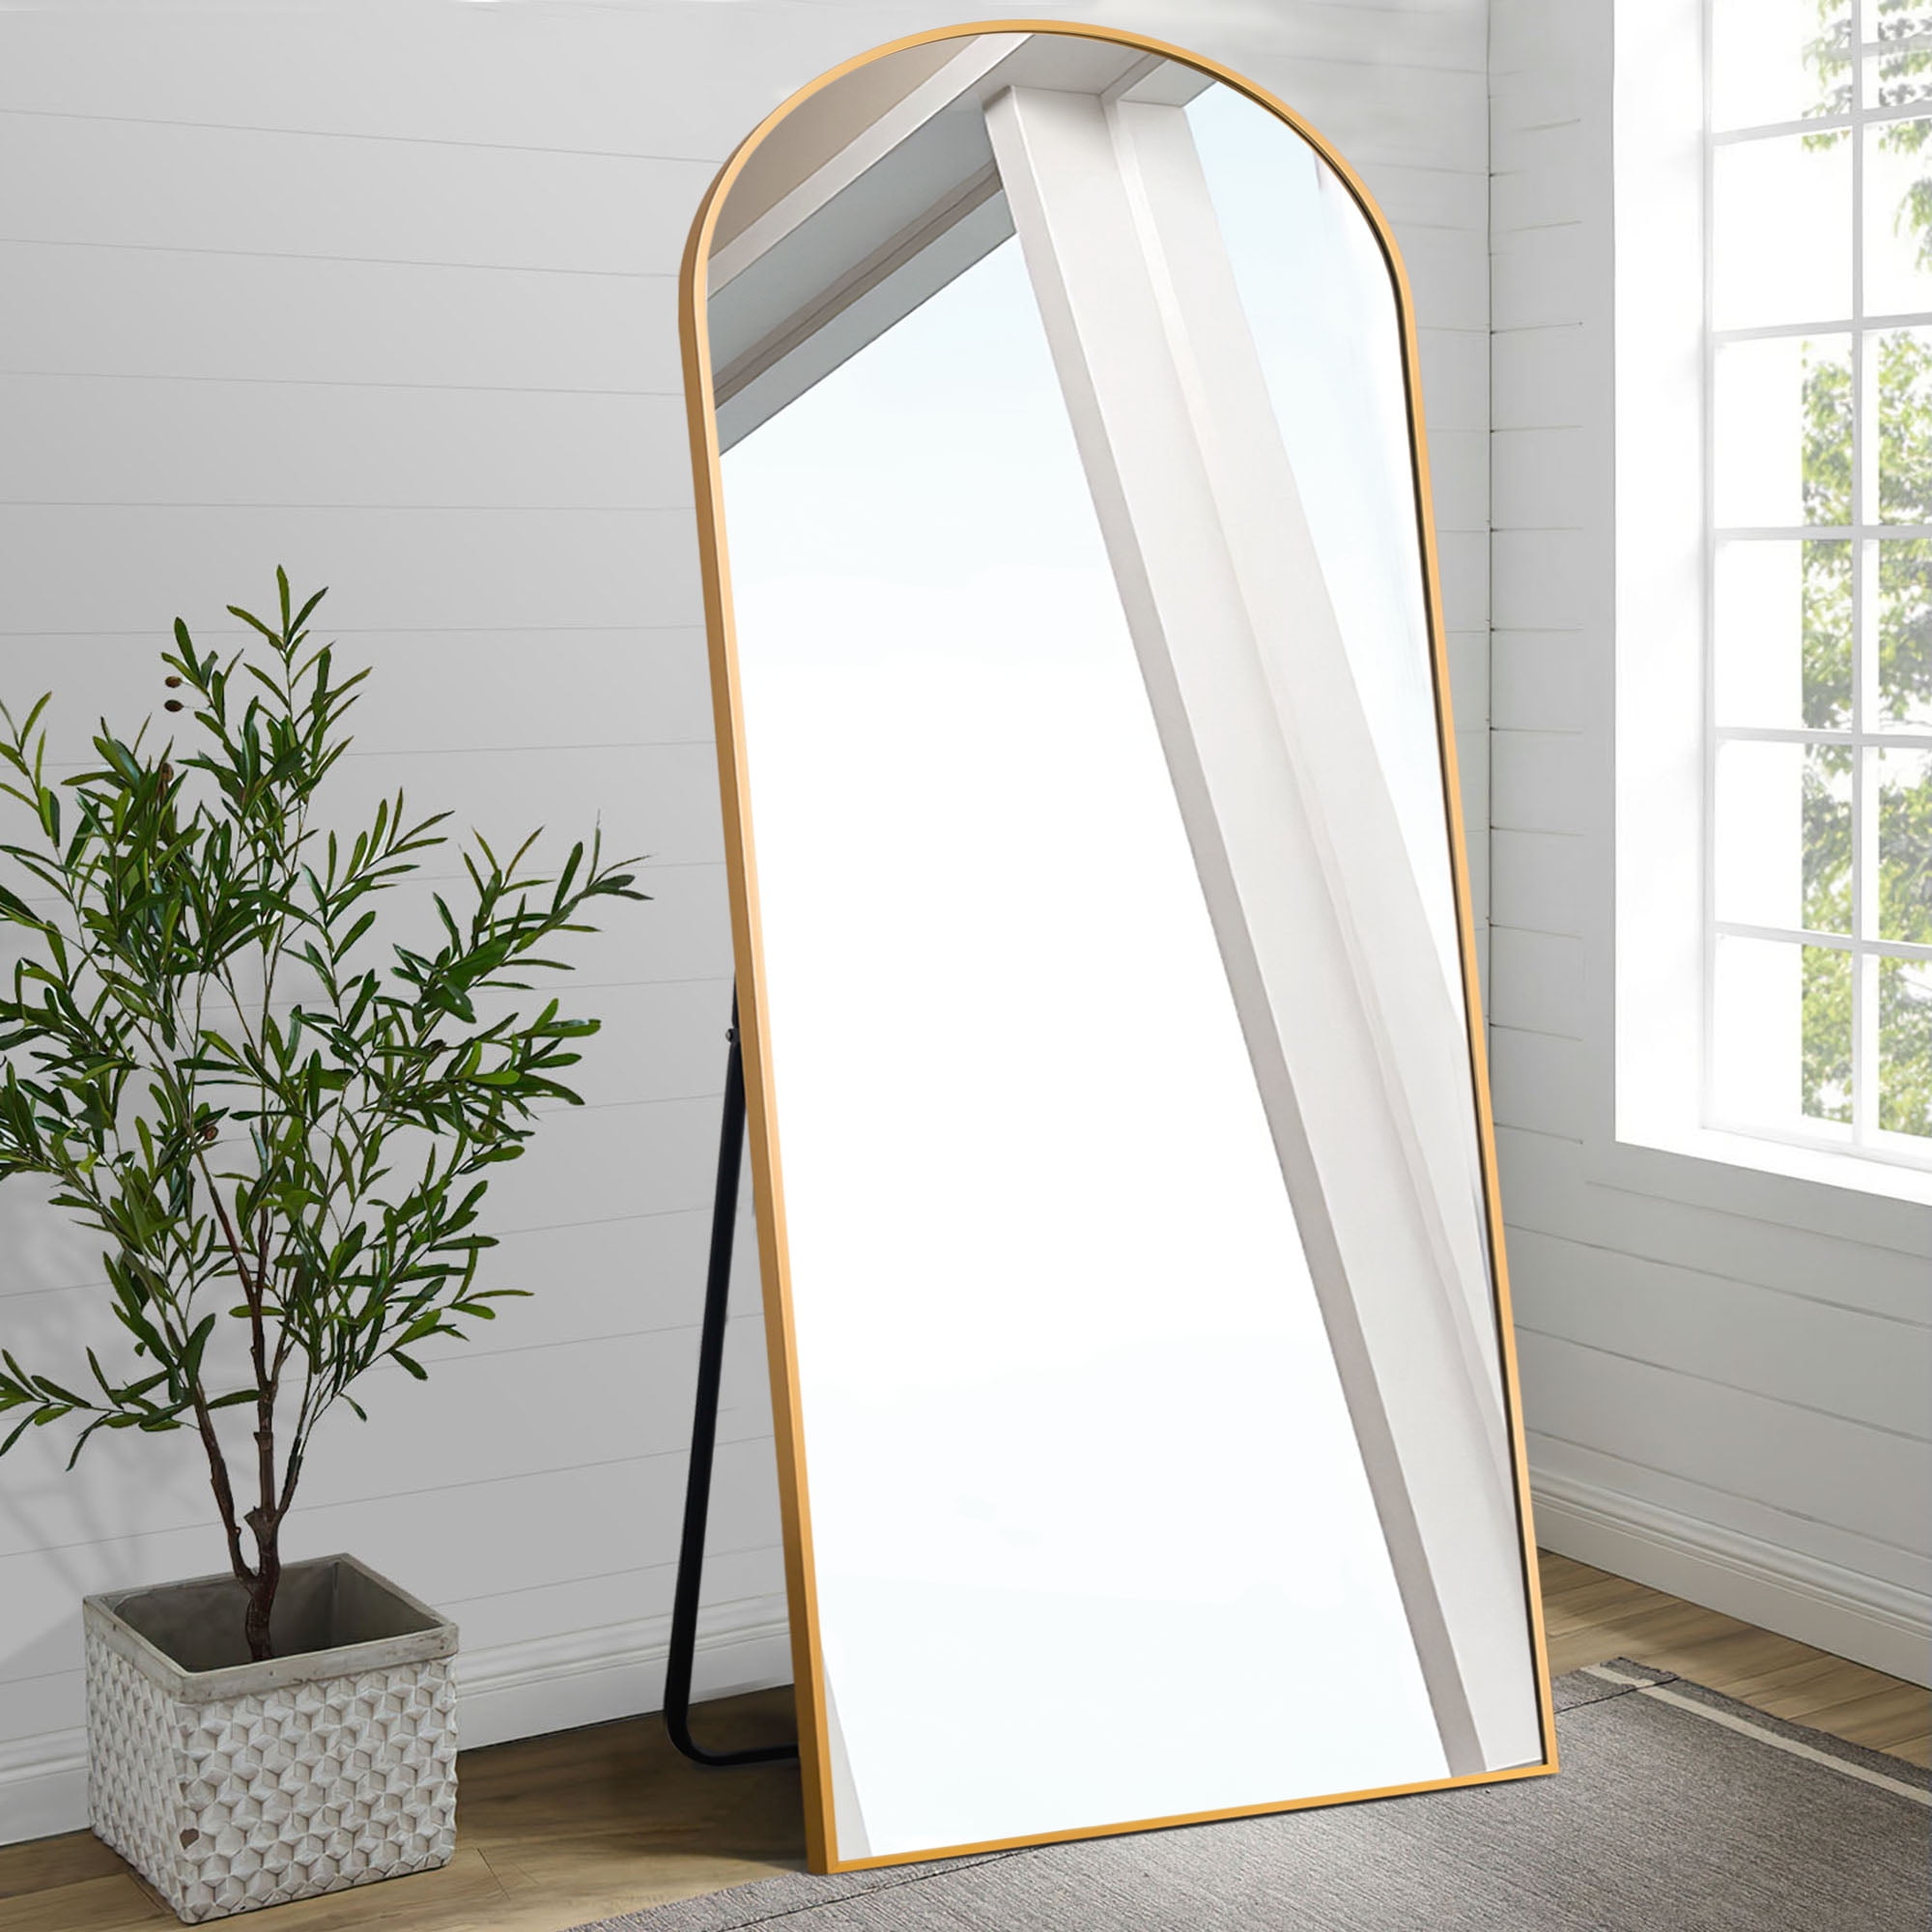 NeuType Arched Mirror 64x21 Full Length Mirror Floor Mirror Stand Up  Mirror